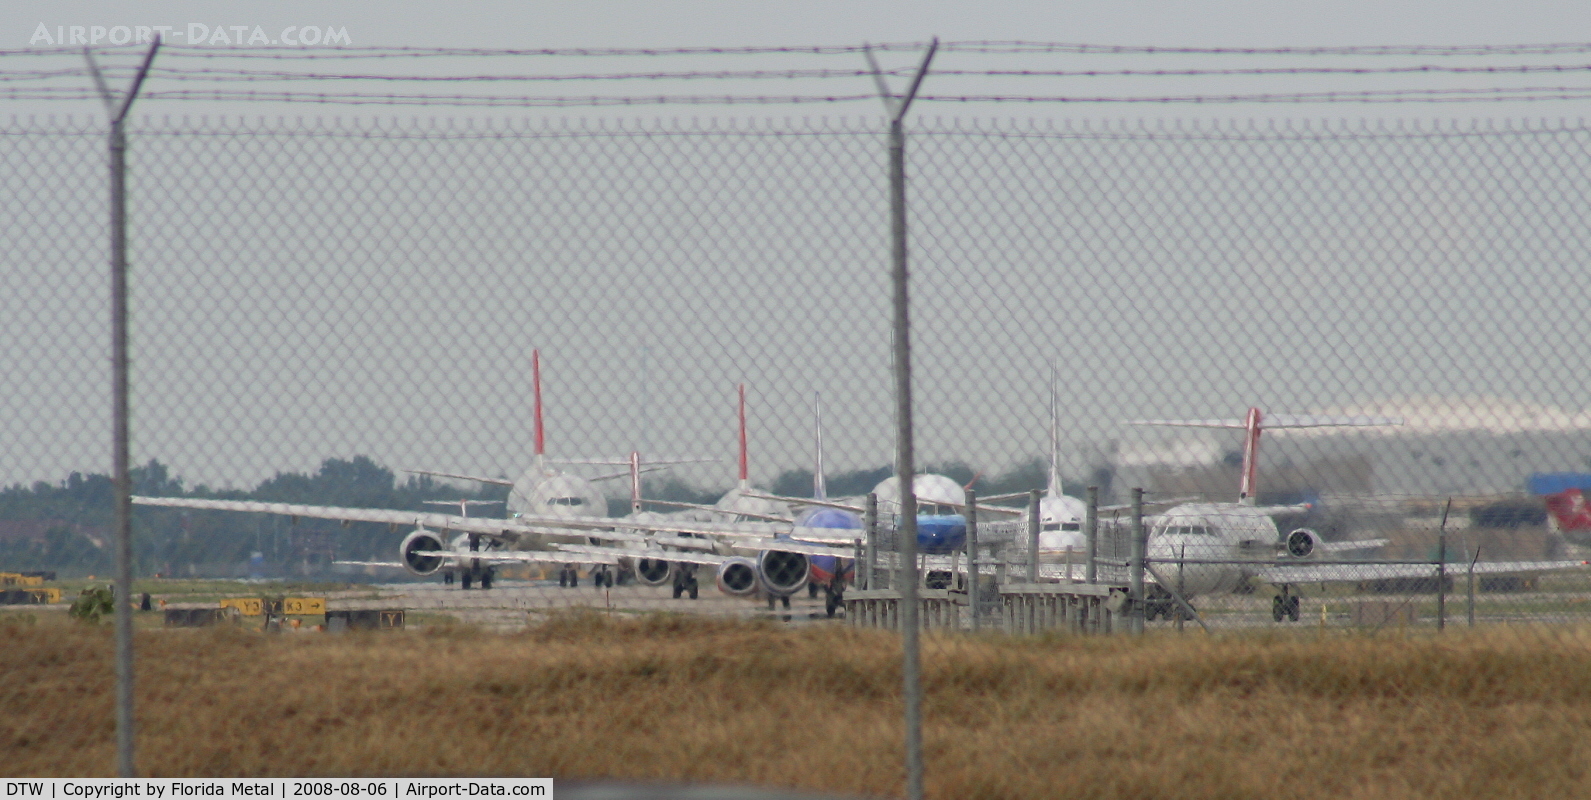 Detroit Metropolitan Wayne County Airport (DTW) - Line up of aircraft waiting to depart DTW